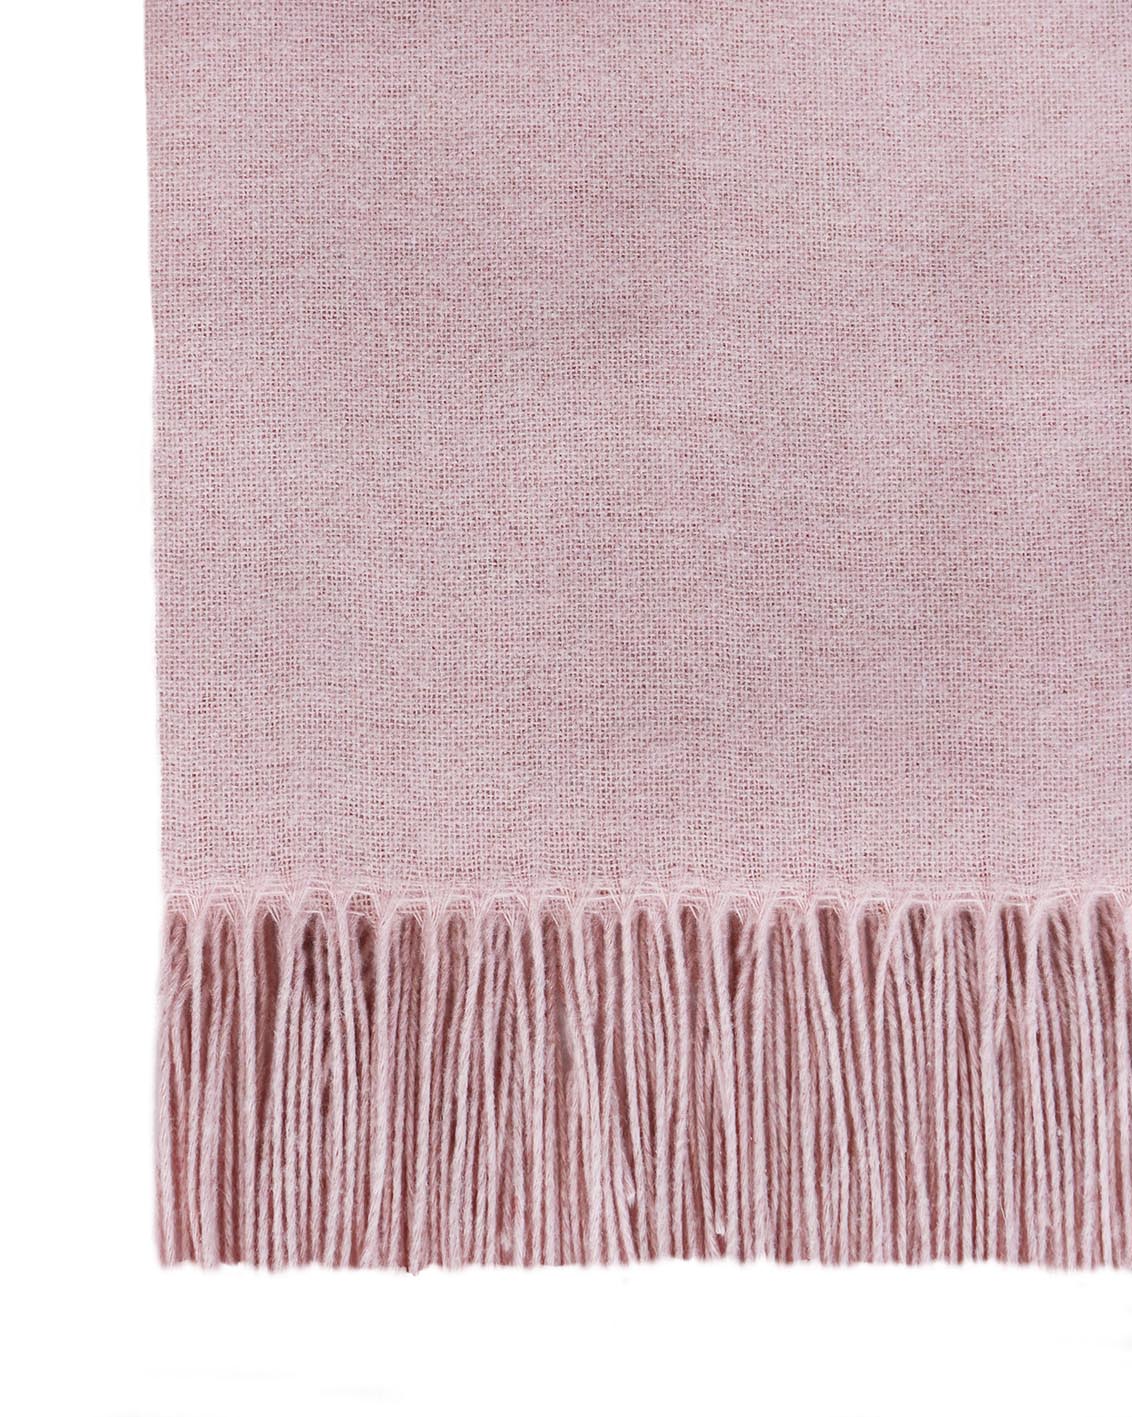 MILLIE Blush Merino Wool Blend Throw Blanket Online | Hamptons Home